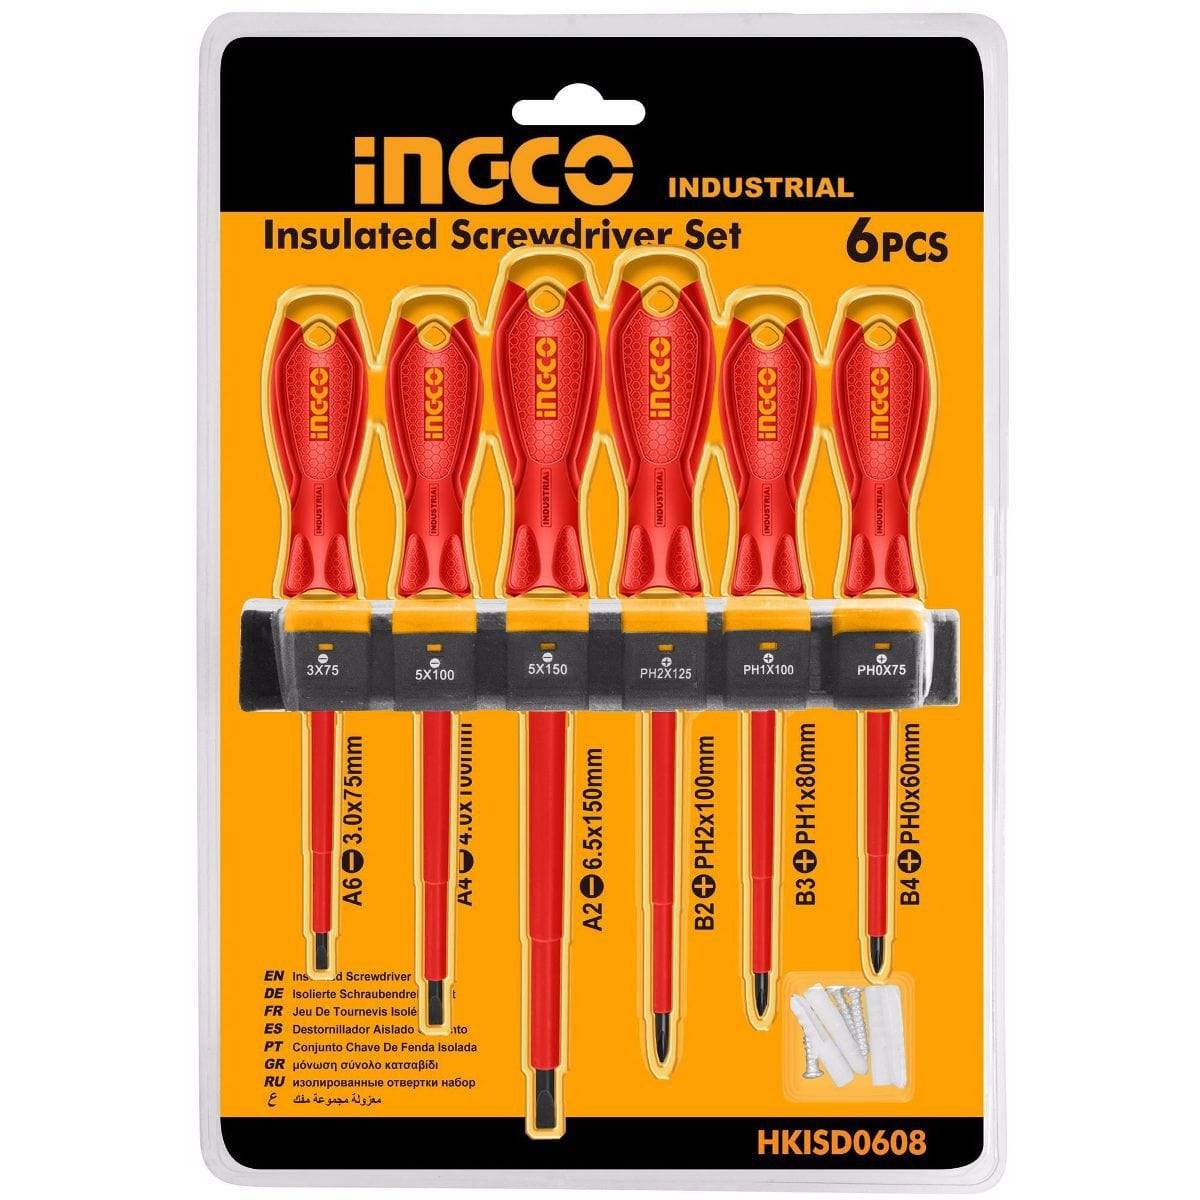 Ingco 6 PCS Insulated Screwdriver Set - HKISD0608